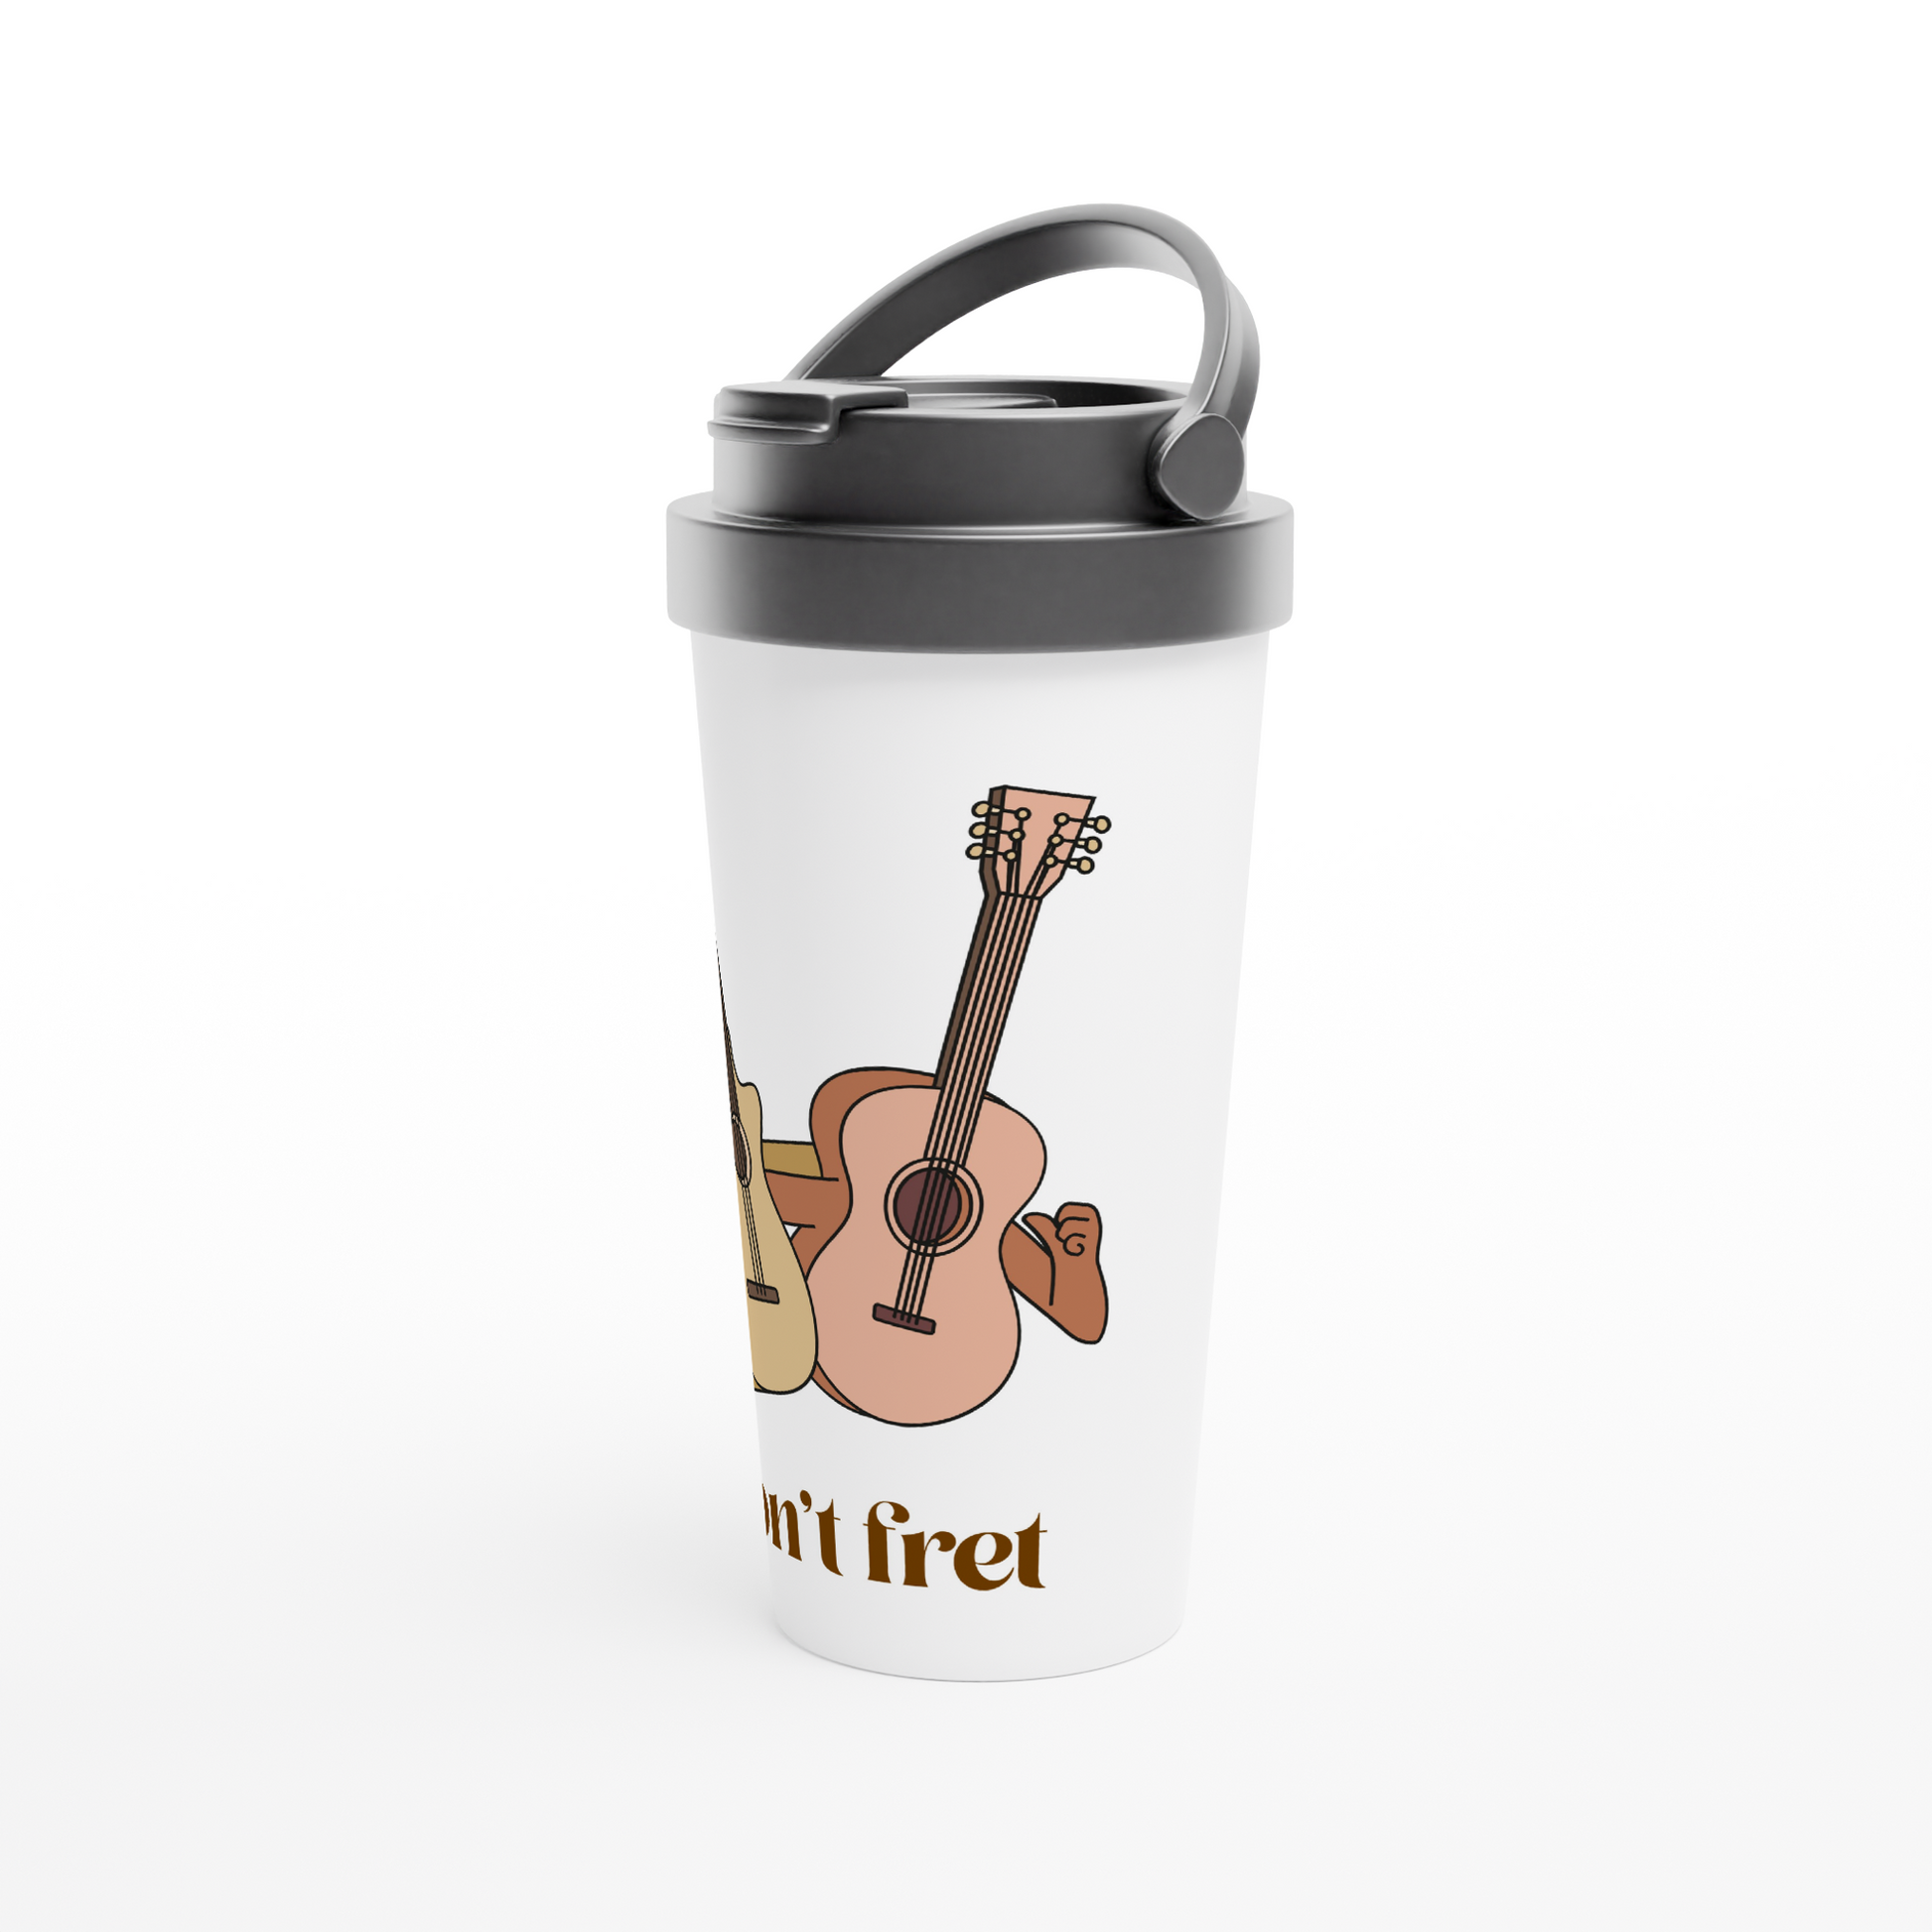 Don't Fret - White 15oz Stainless Steel Travel Mug Travel Mug Music